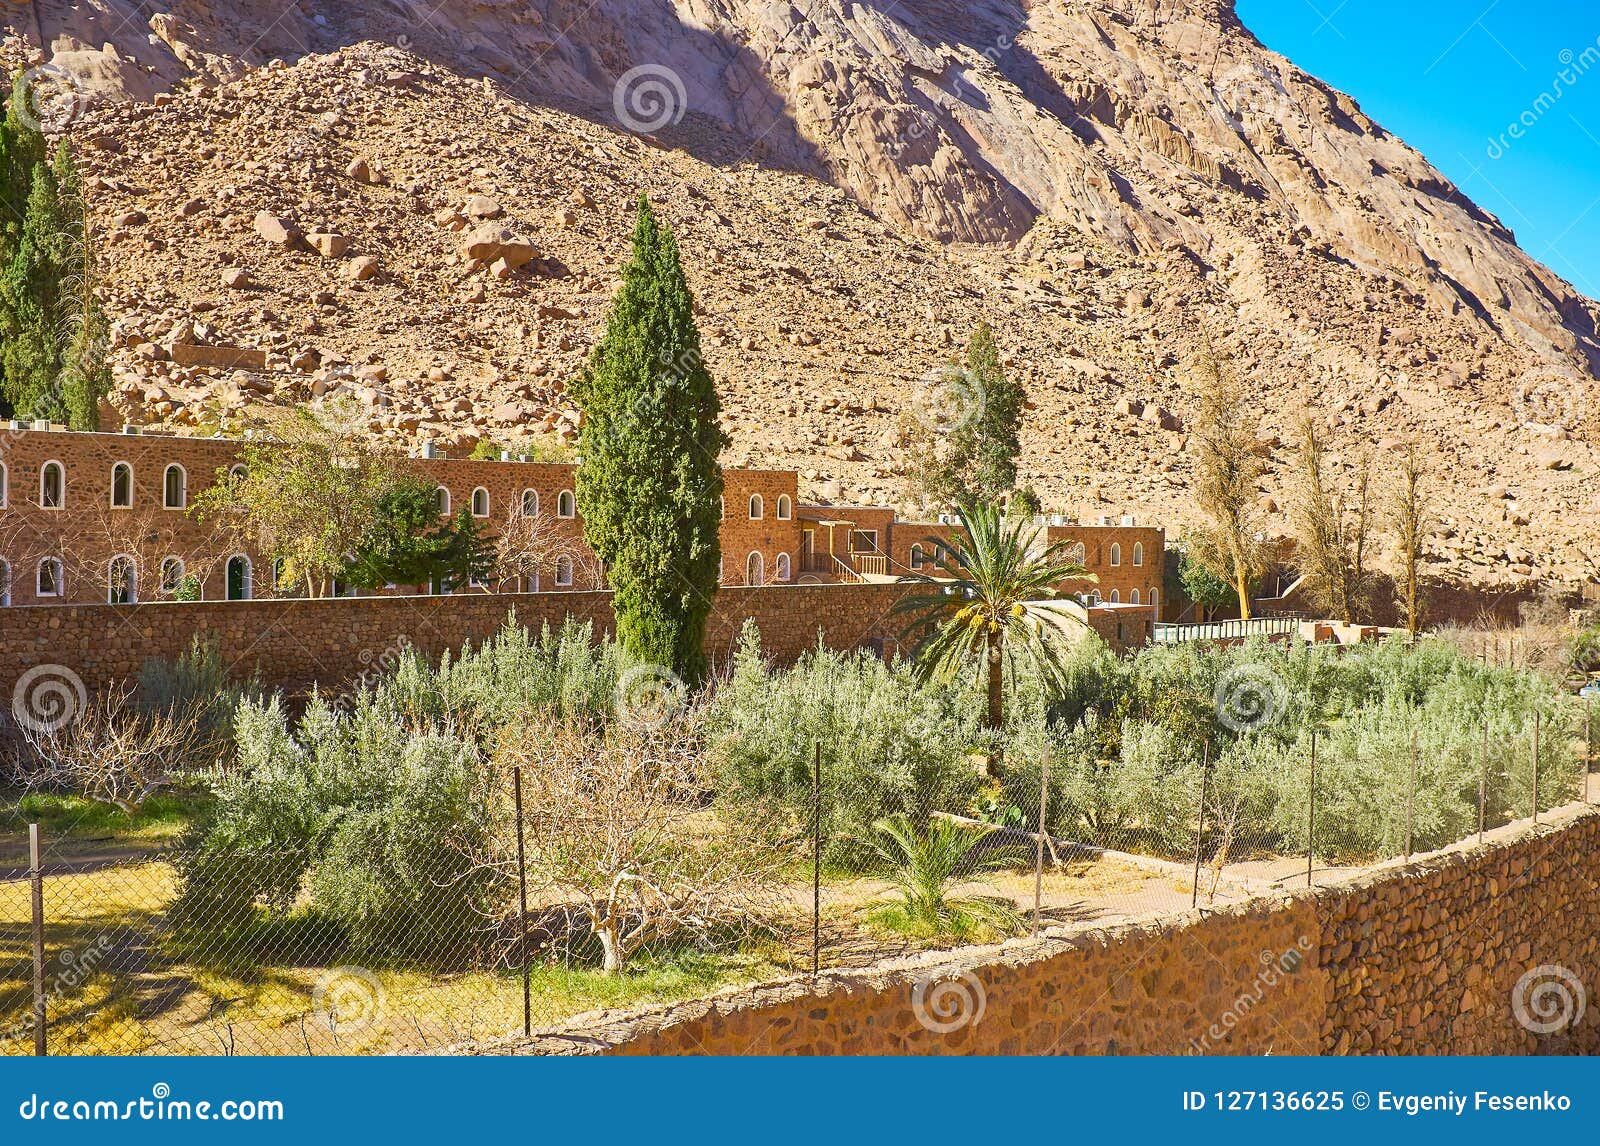 The Garden In Sinai Desert Egypt Stock Image Image Of Canyon